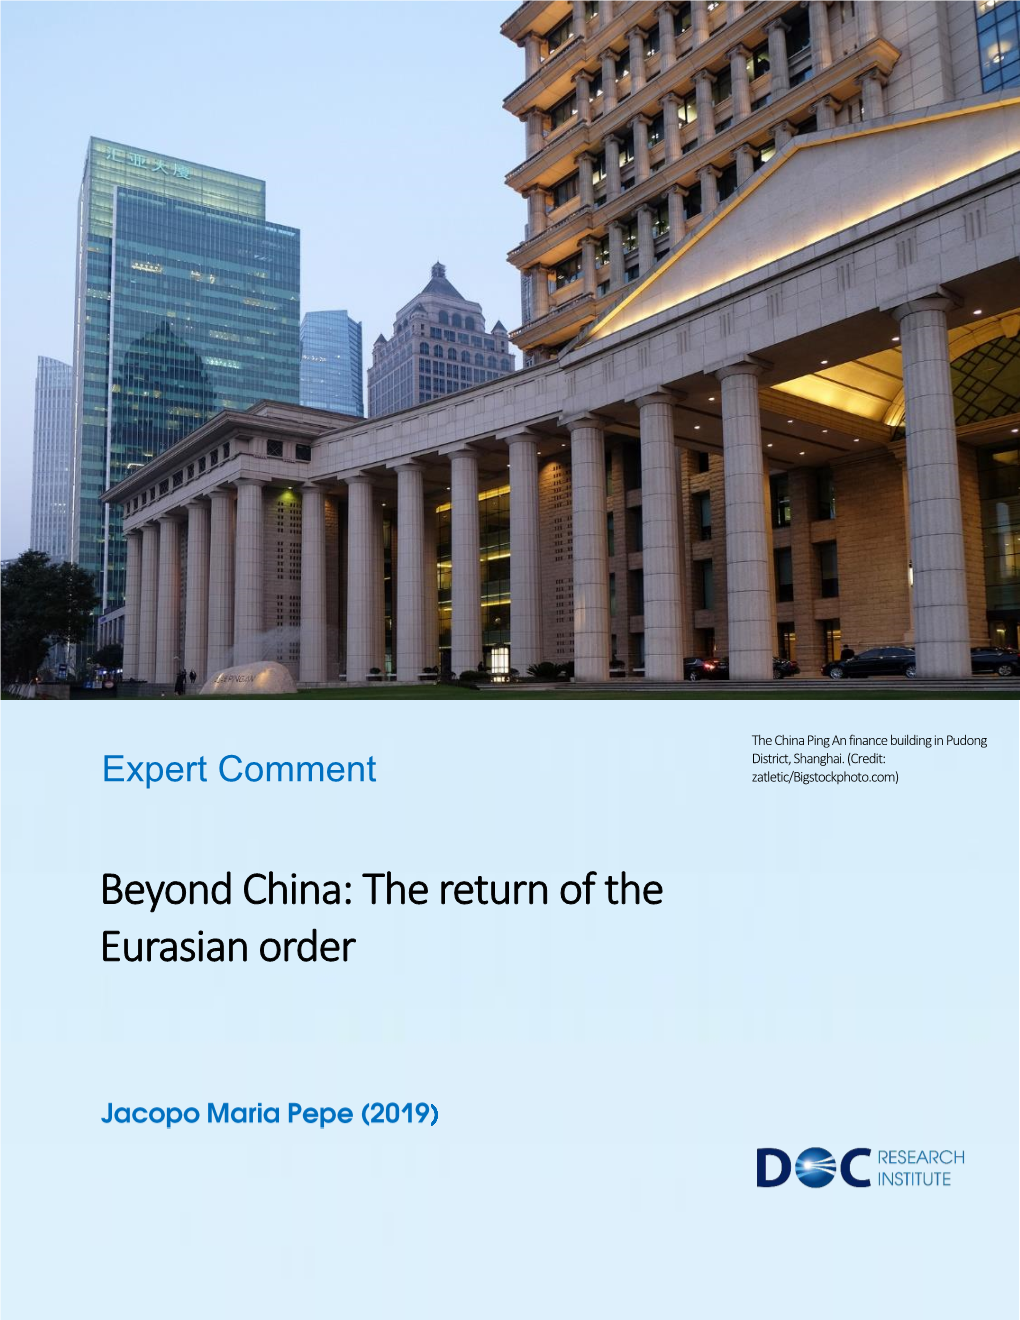 Beyond China: the Return of the Eurasian Order